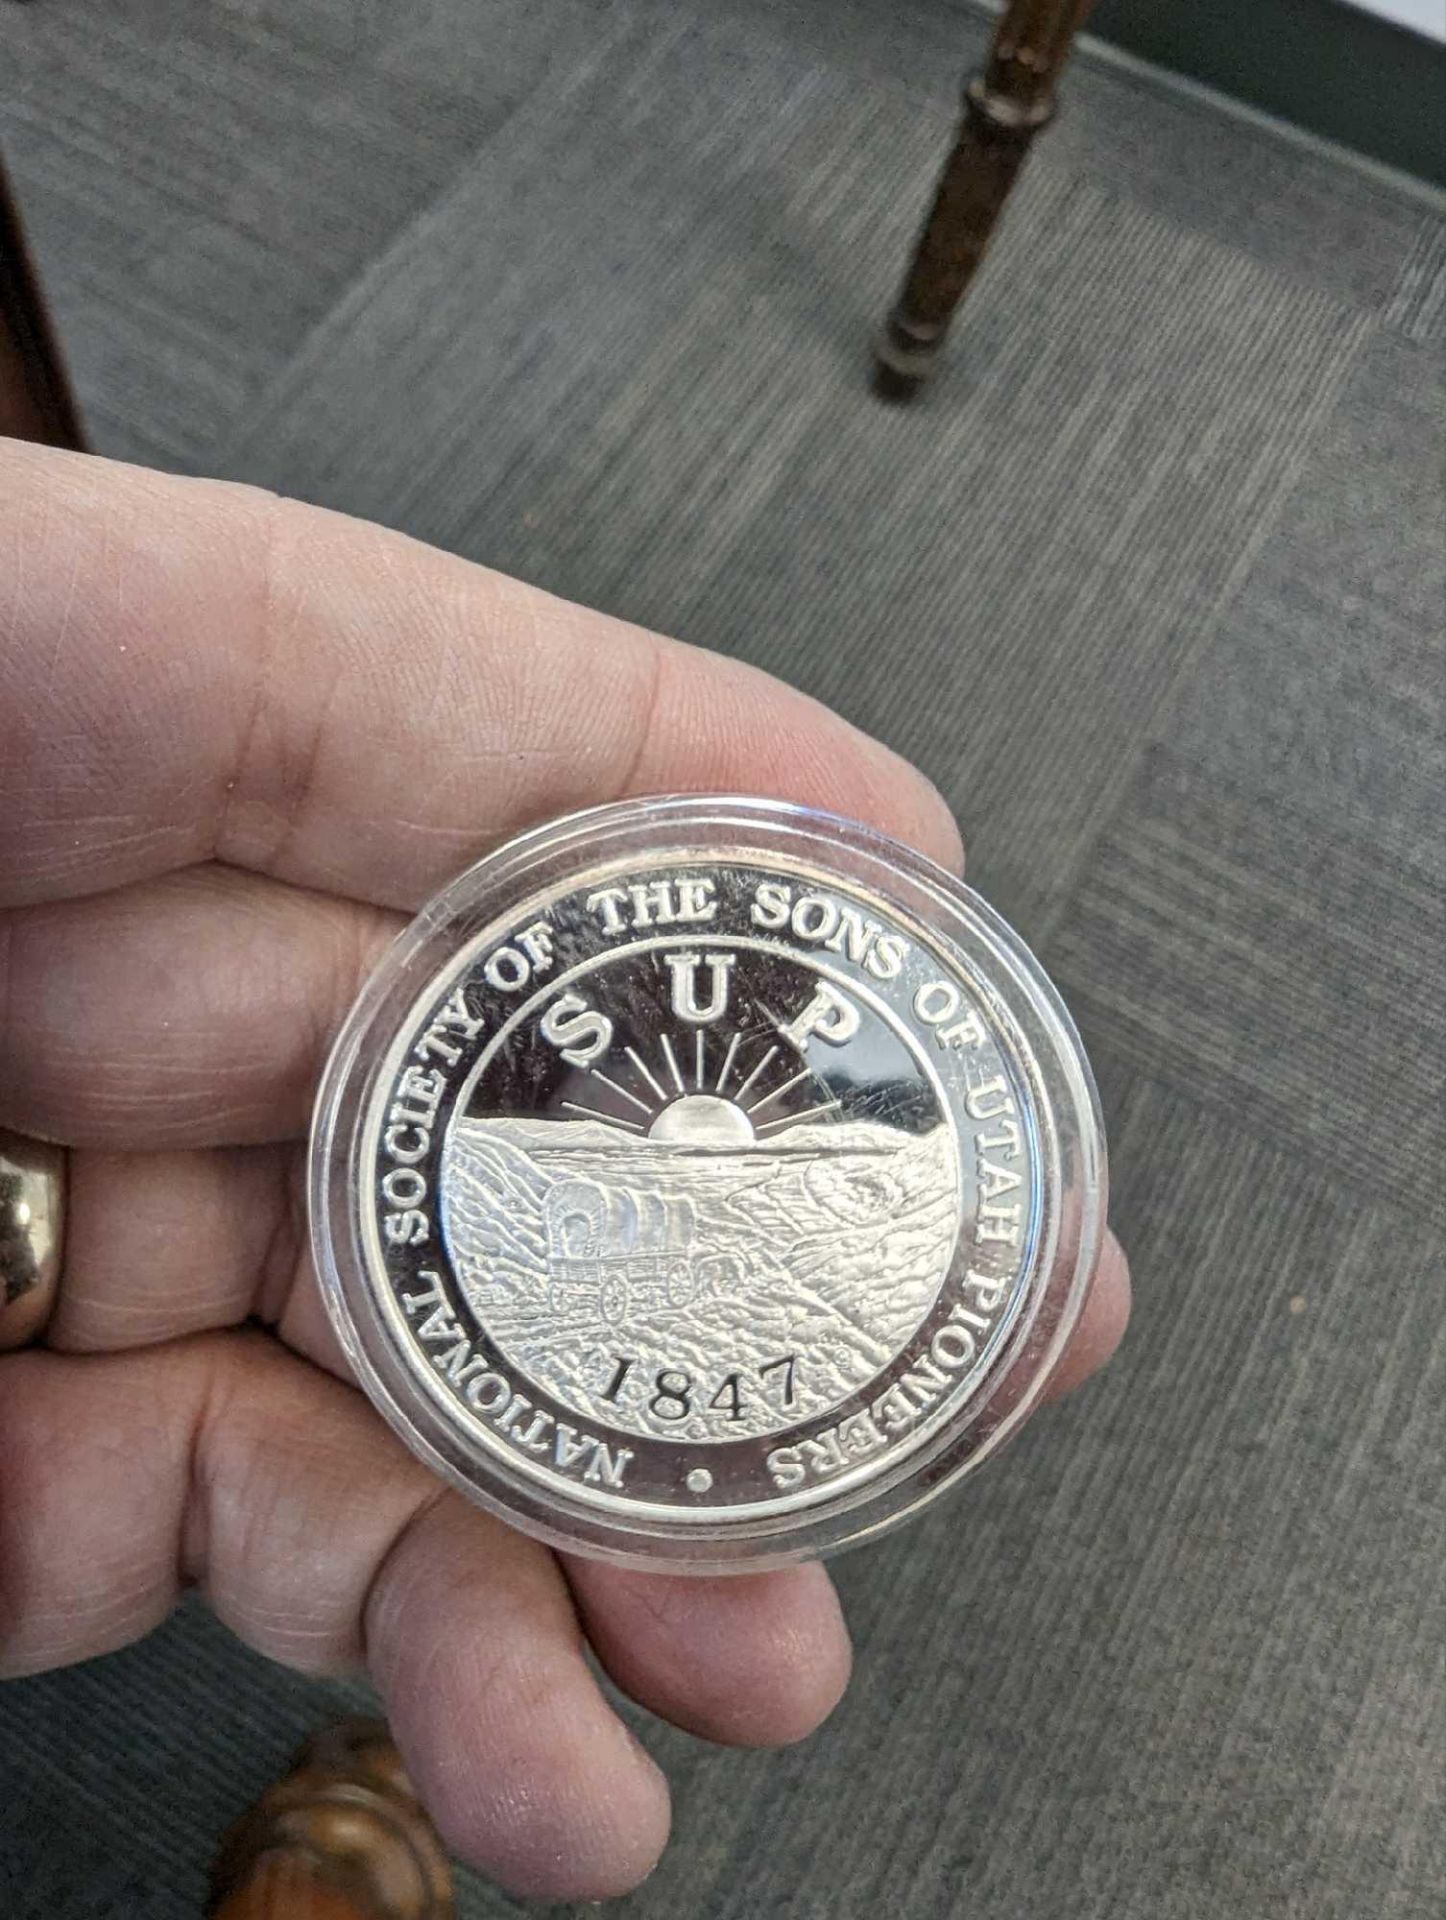 Joseph Smith sacred Grove 1 oz coin - Image 2 of 2